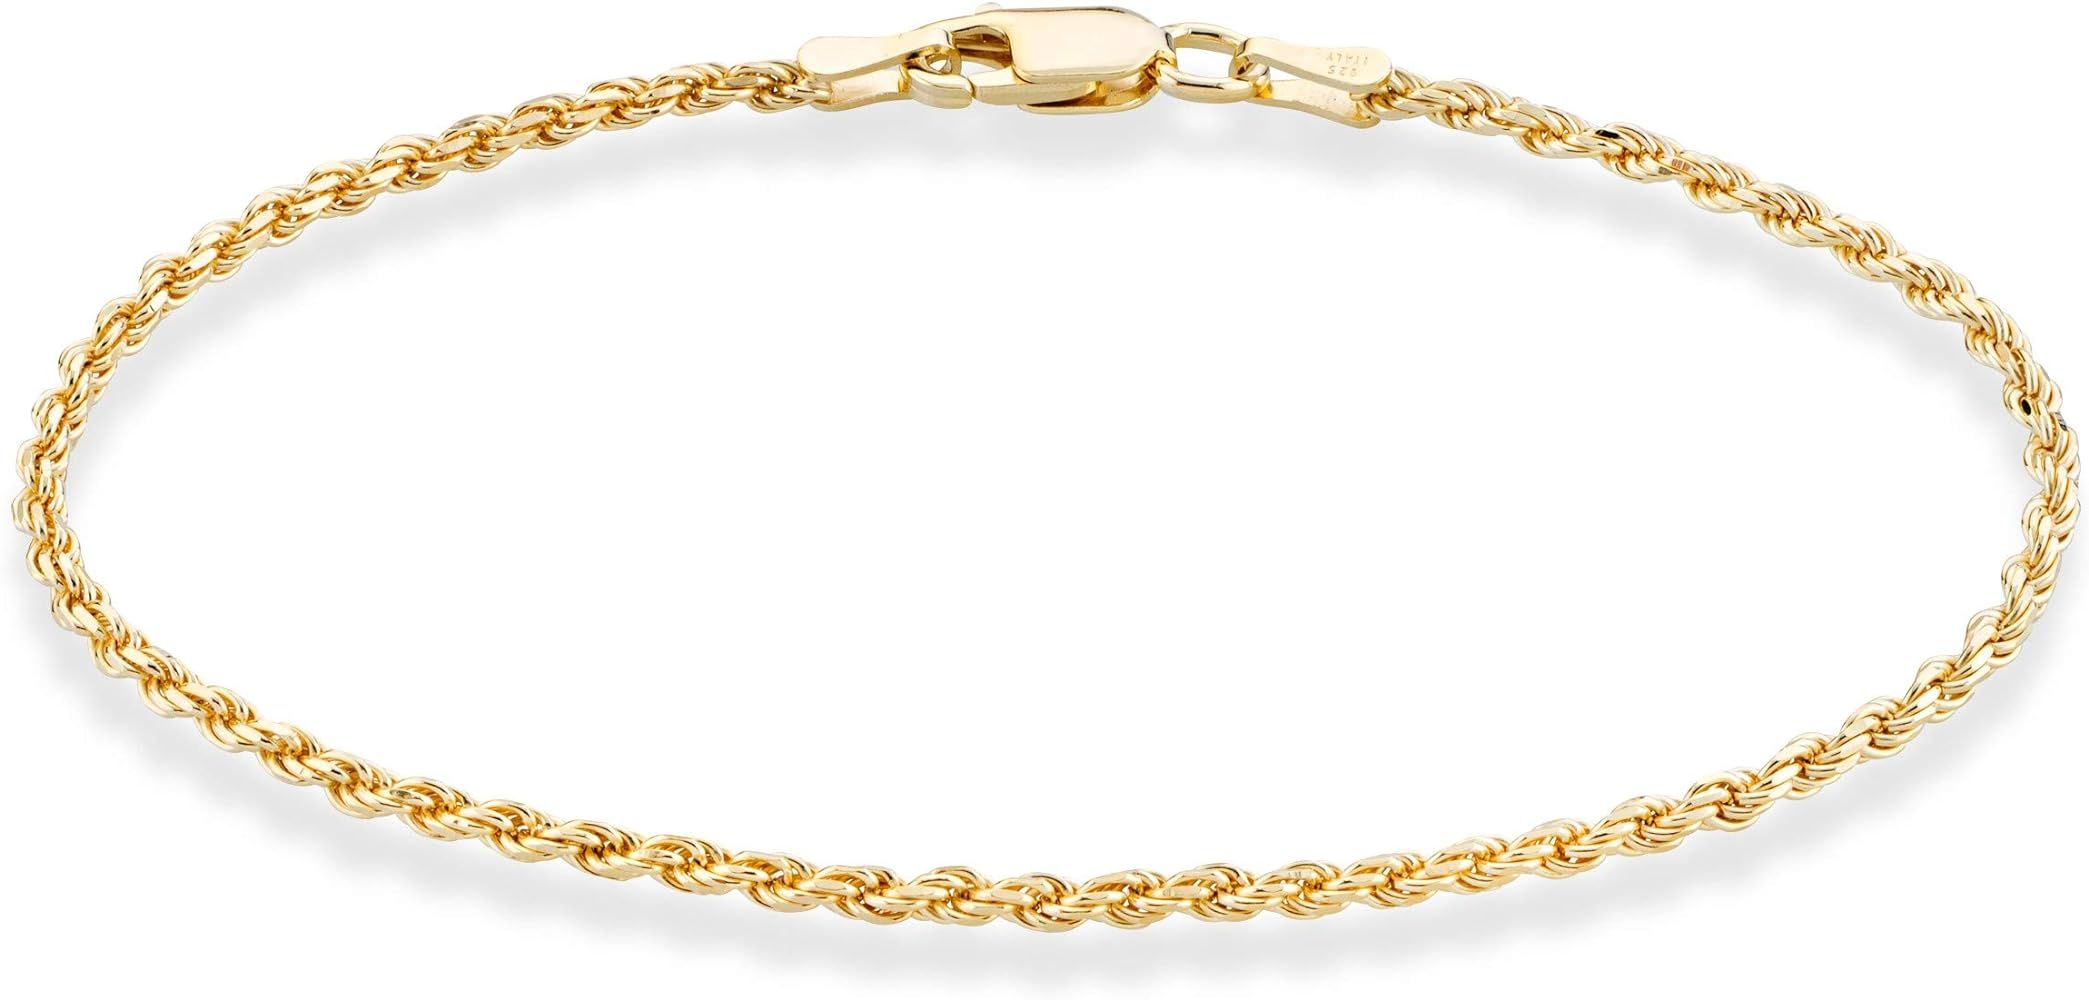 Miabella 18K Gold Over Sterling Silver Italian 2mm, 3mm Diamond-Cut Braided Rope Chain Bracelet f... | Amazon (US)